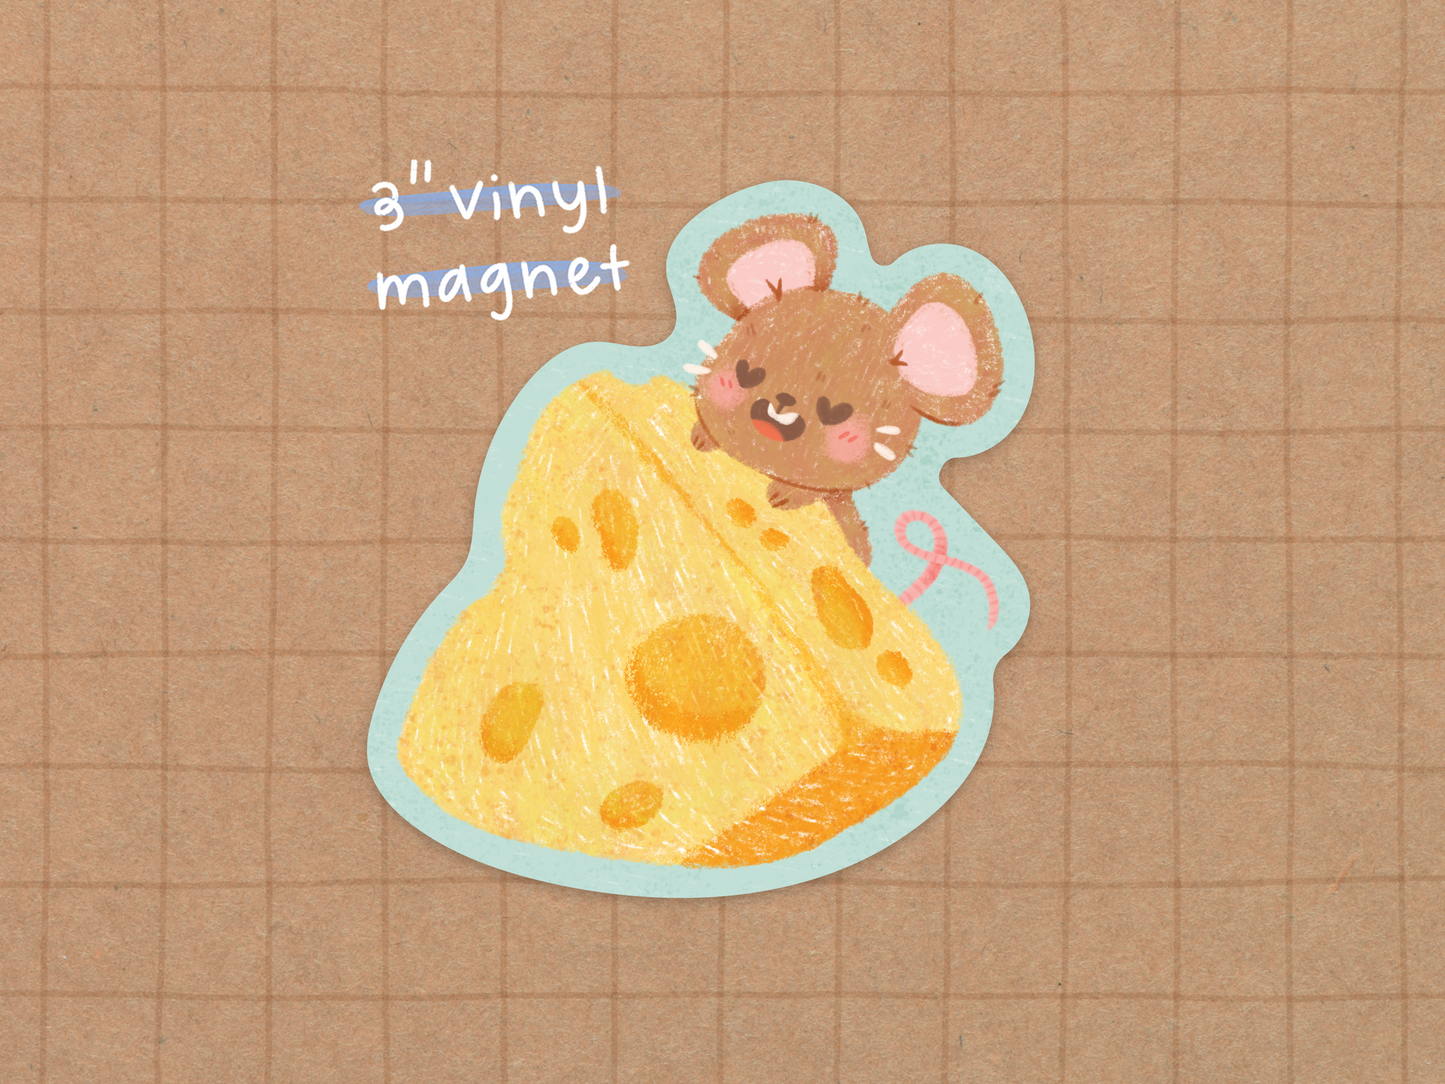 Cheesy Mouse Vinyl Magnet